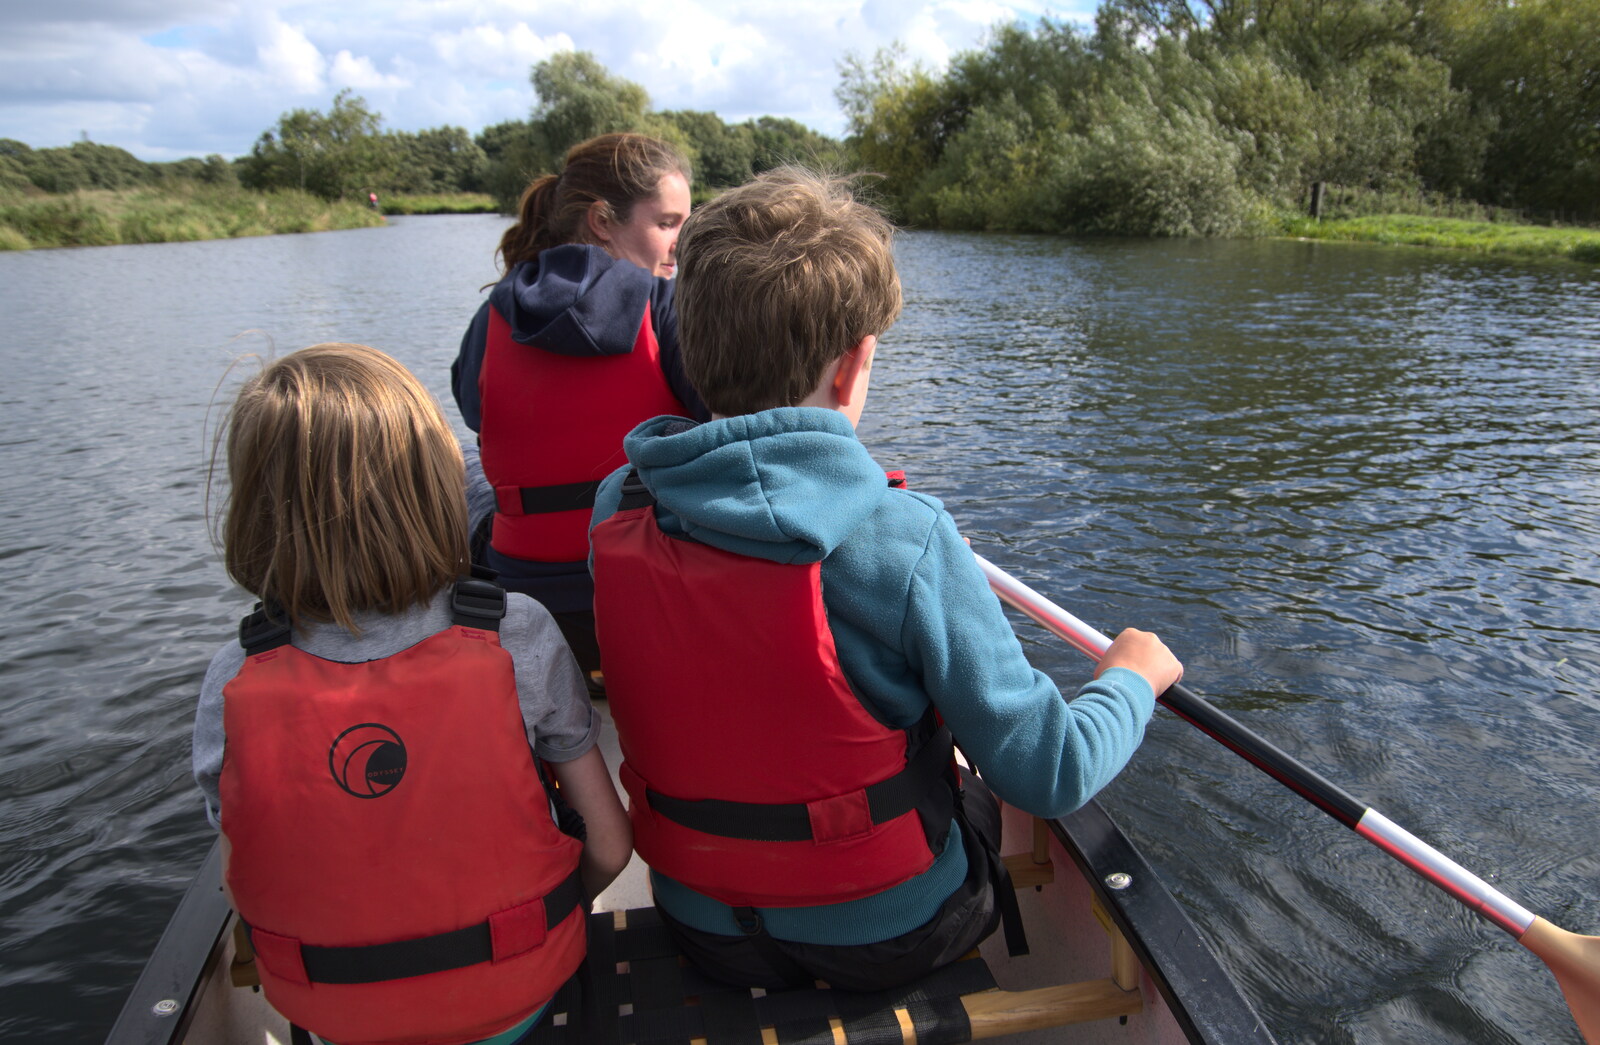 Camping at Three Rivers, Geldeston, Norfolk - 5th September 2020: Fred paddles our kayak